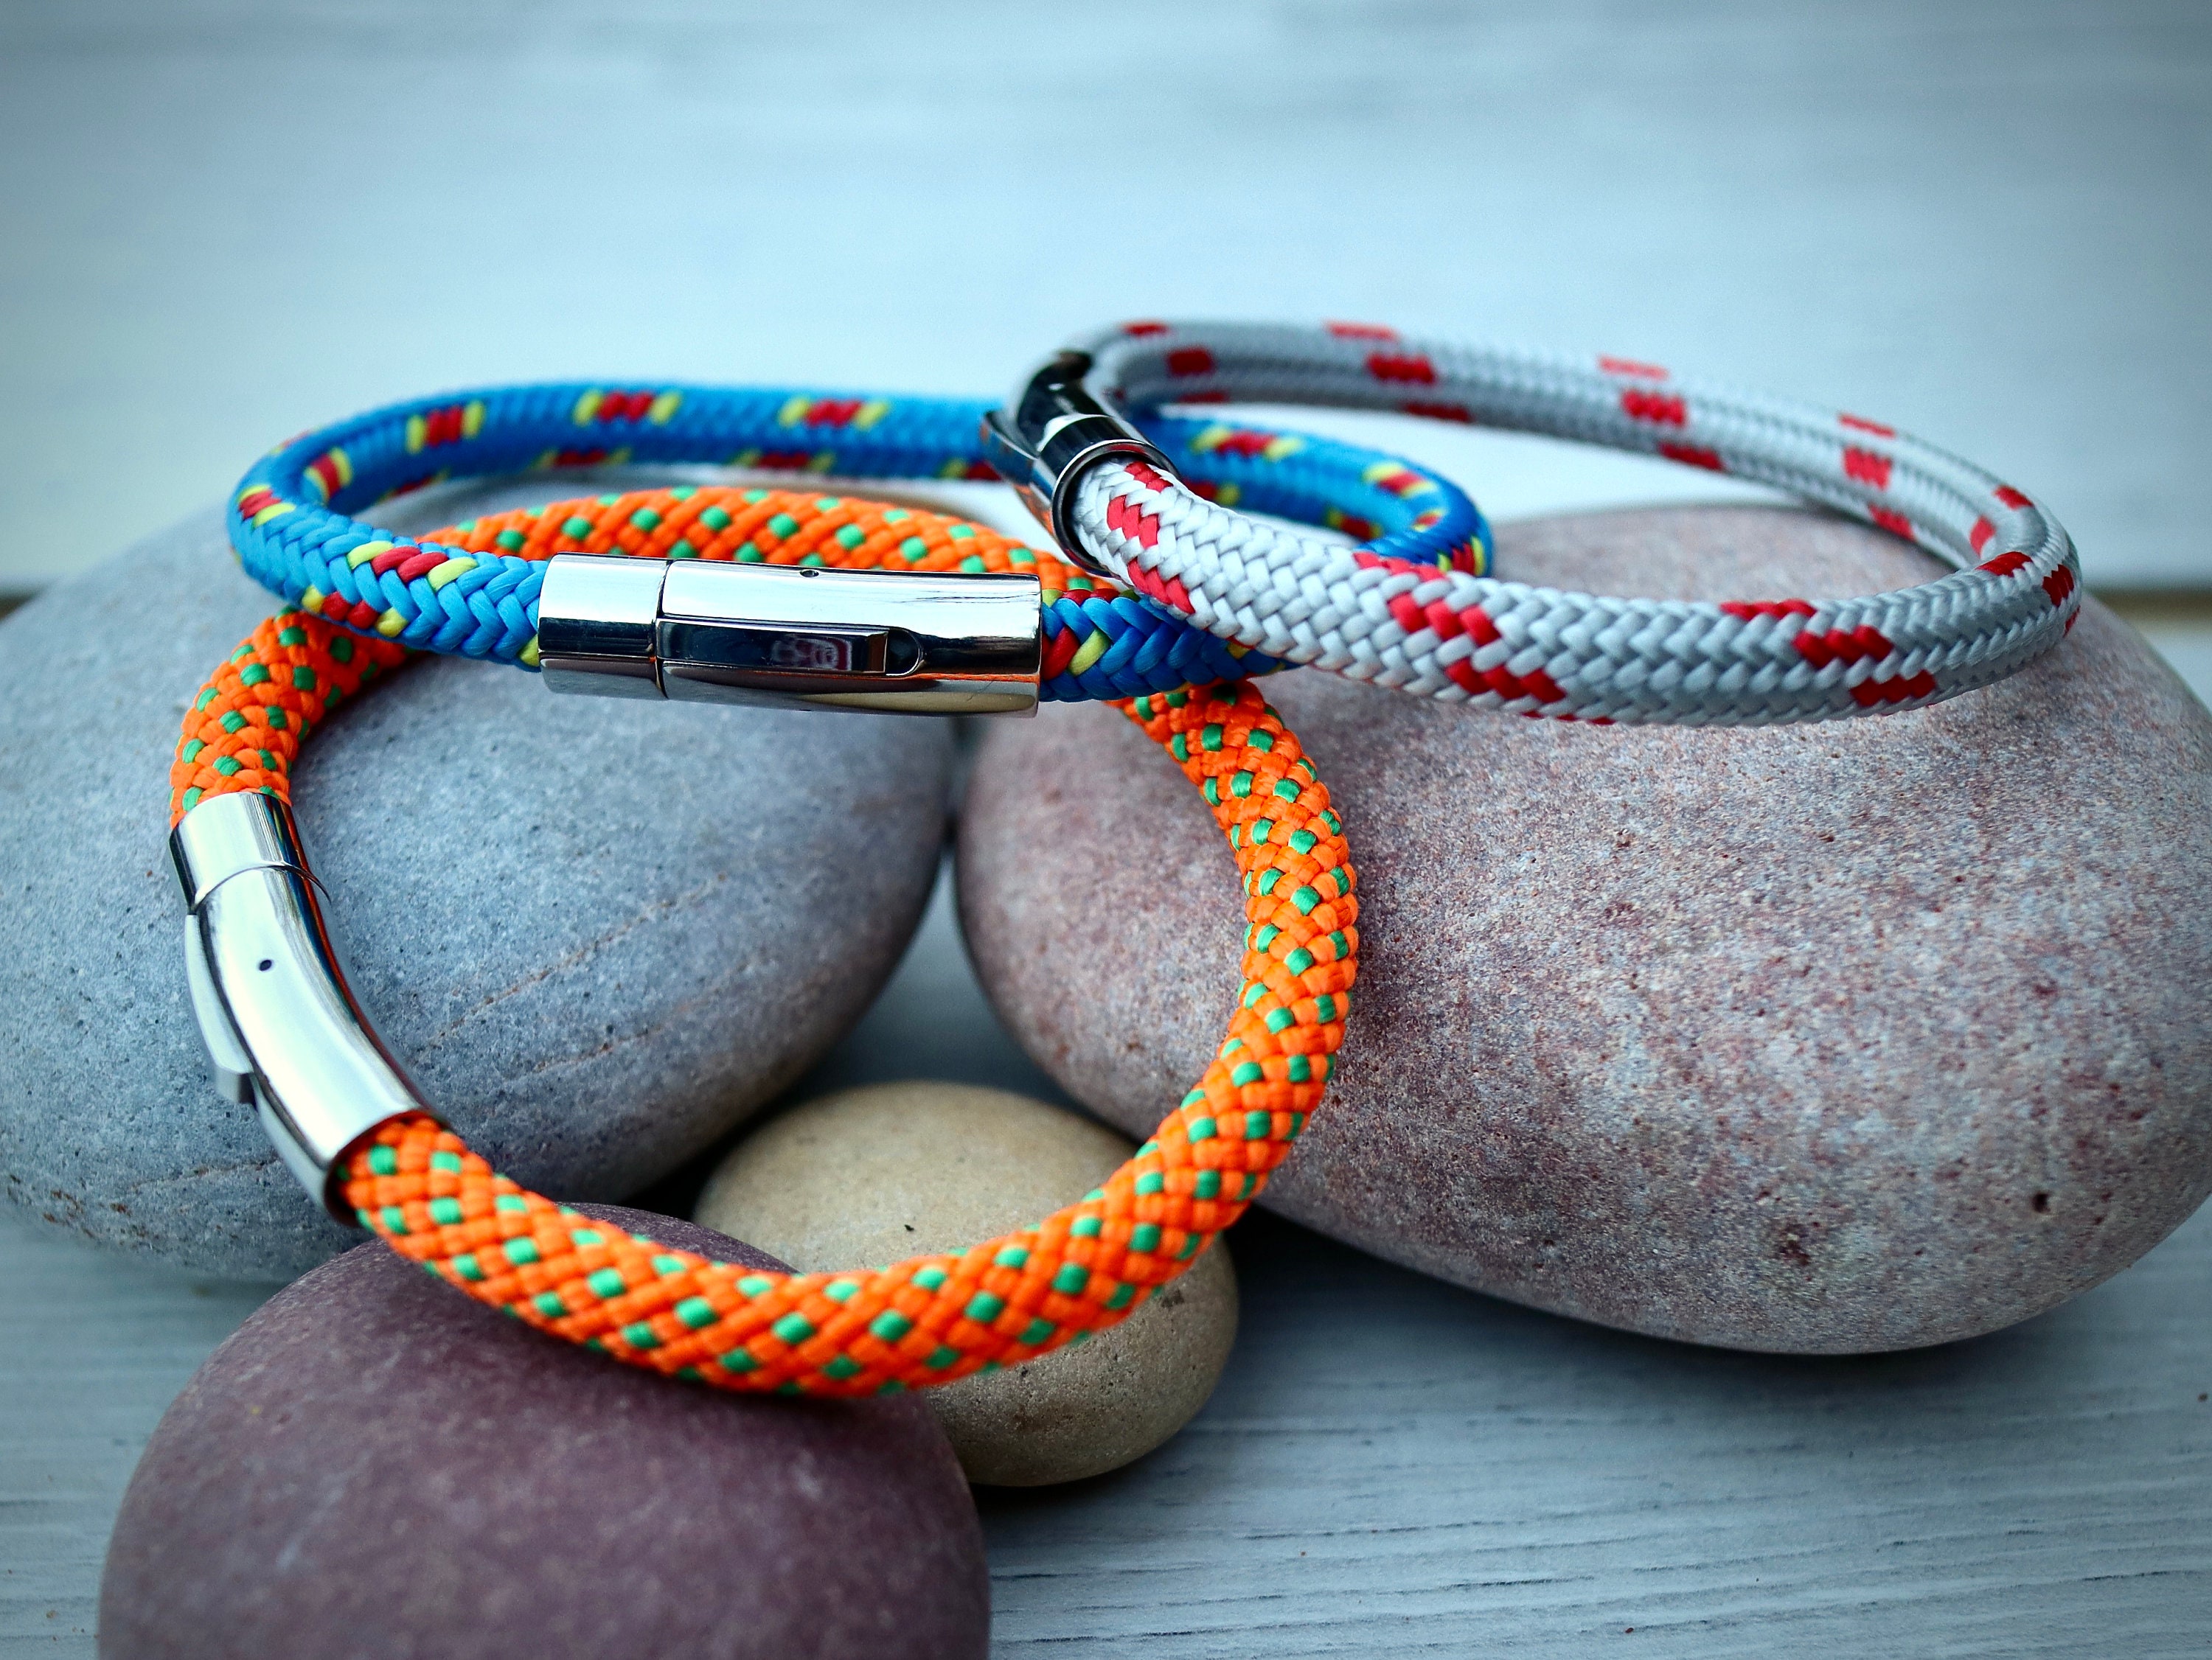 6mm Climbing/Marine Rope Bracelet, Climbing Gift -Marine Rope Bracelet- Gifts for Climbers - Multi-Coloured Bracelet 